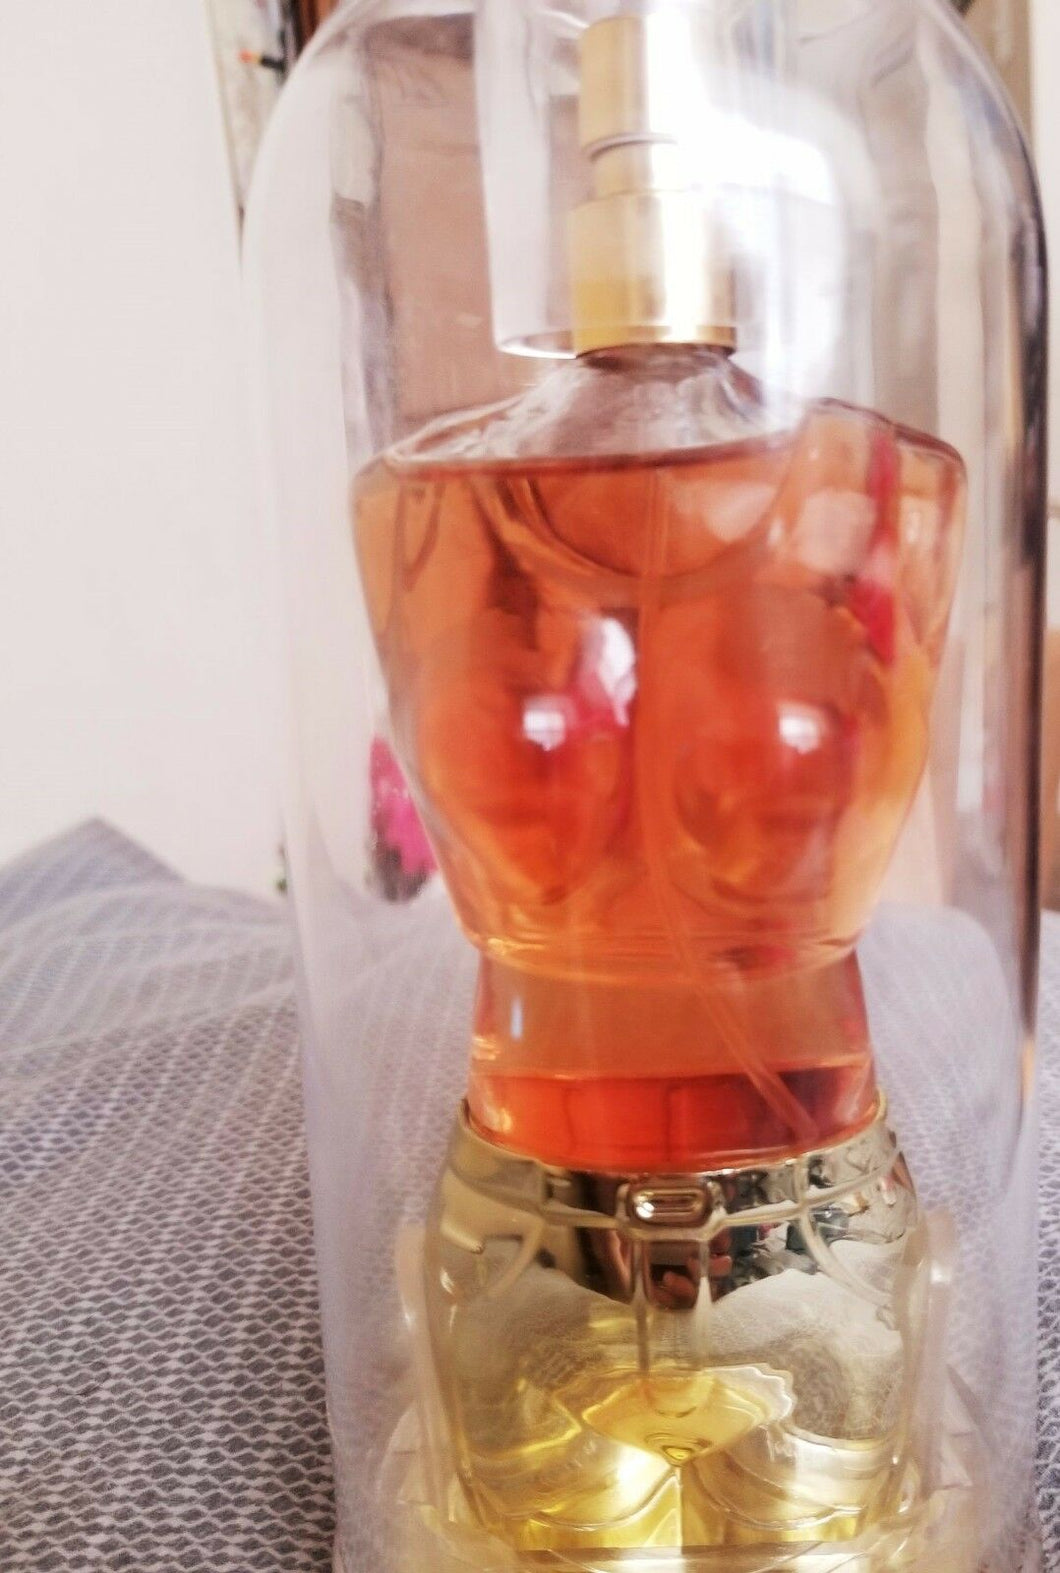 GOLDEN JEANS LEGEND by Sasoon & Amanda 2.5 oz 75 ml EDT Spray for Women * SEALED - Perfume Gallery